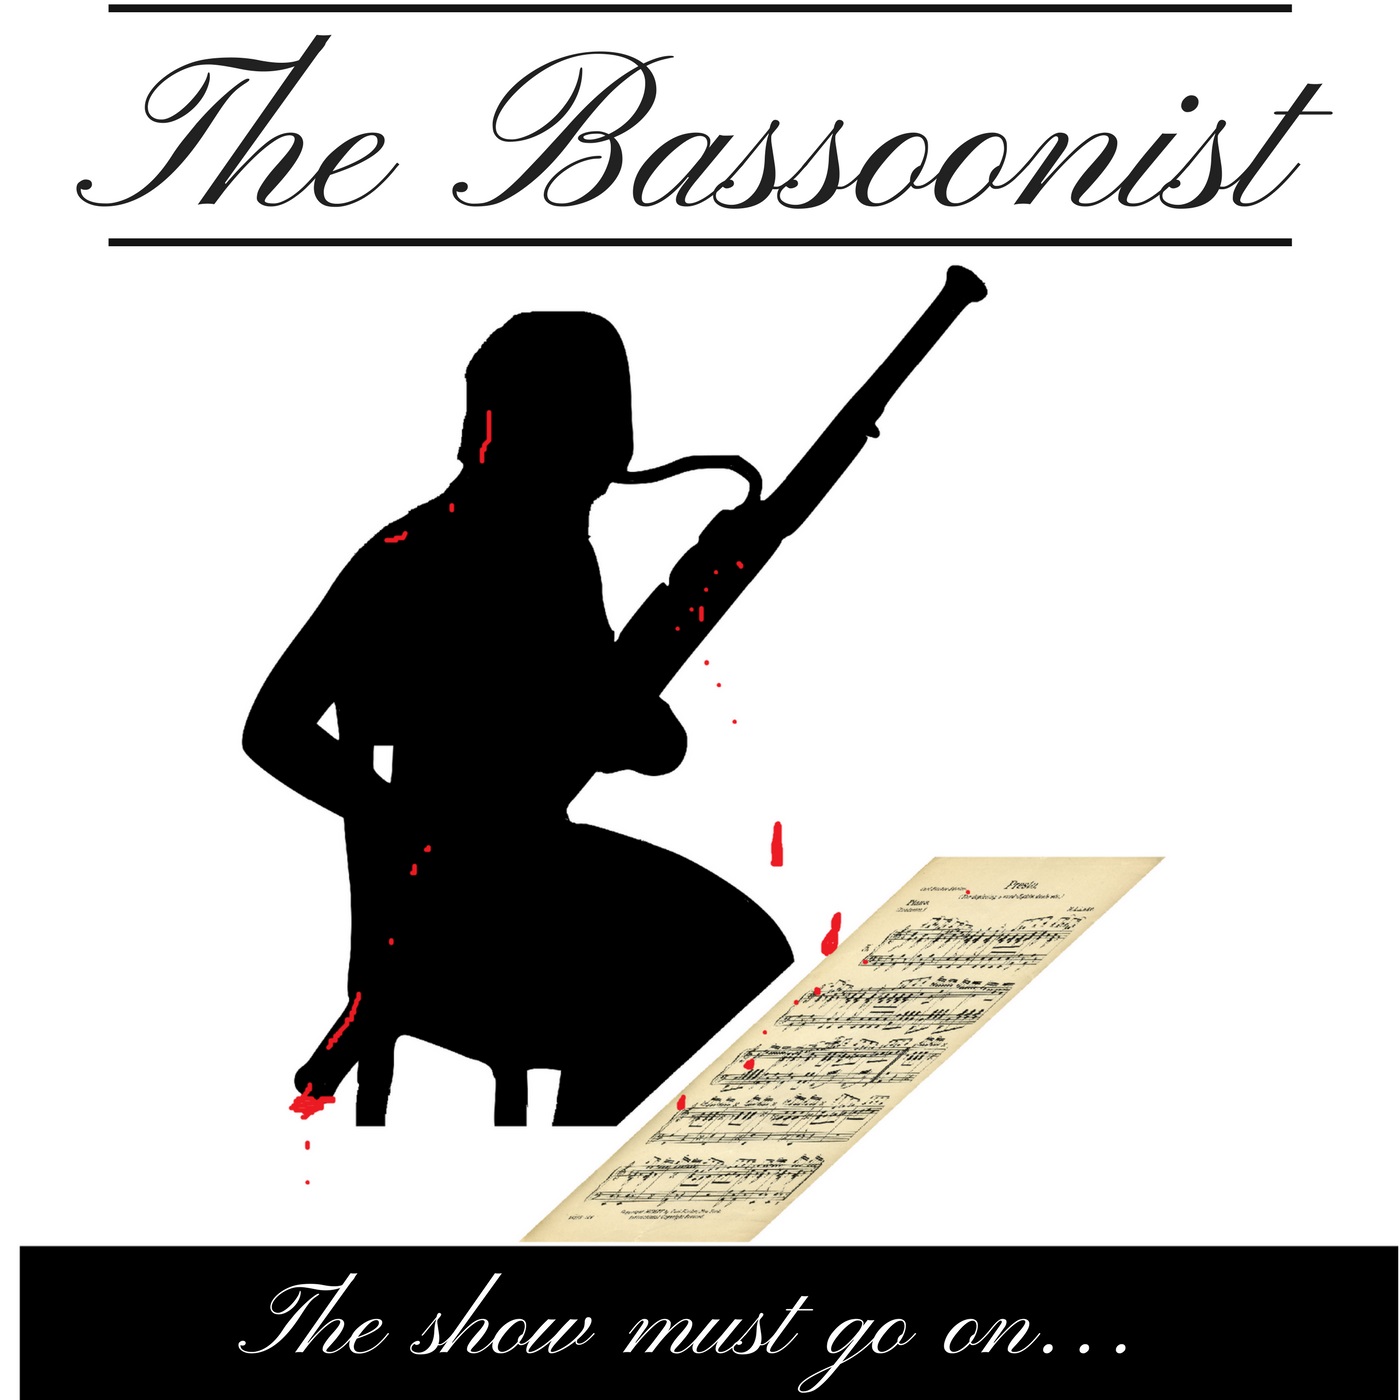 Episode 75 - The Bassoonist feat. Ben DiPette